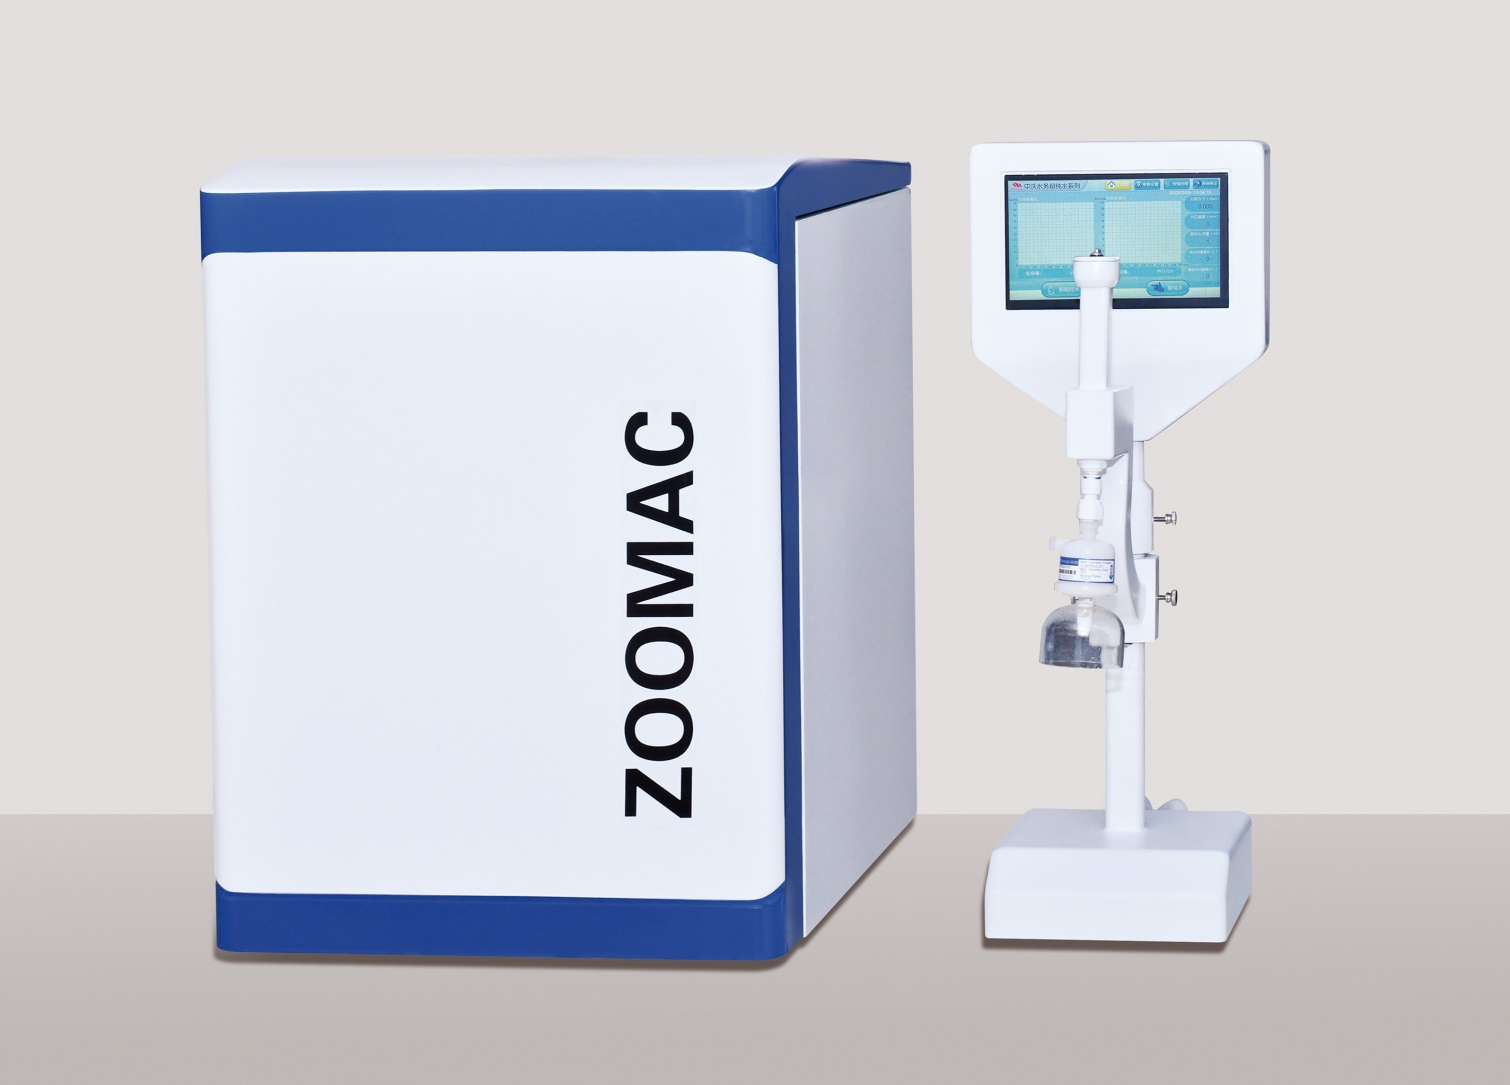 ZOOMAC-H系列超纯水系统